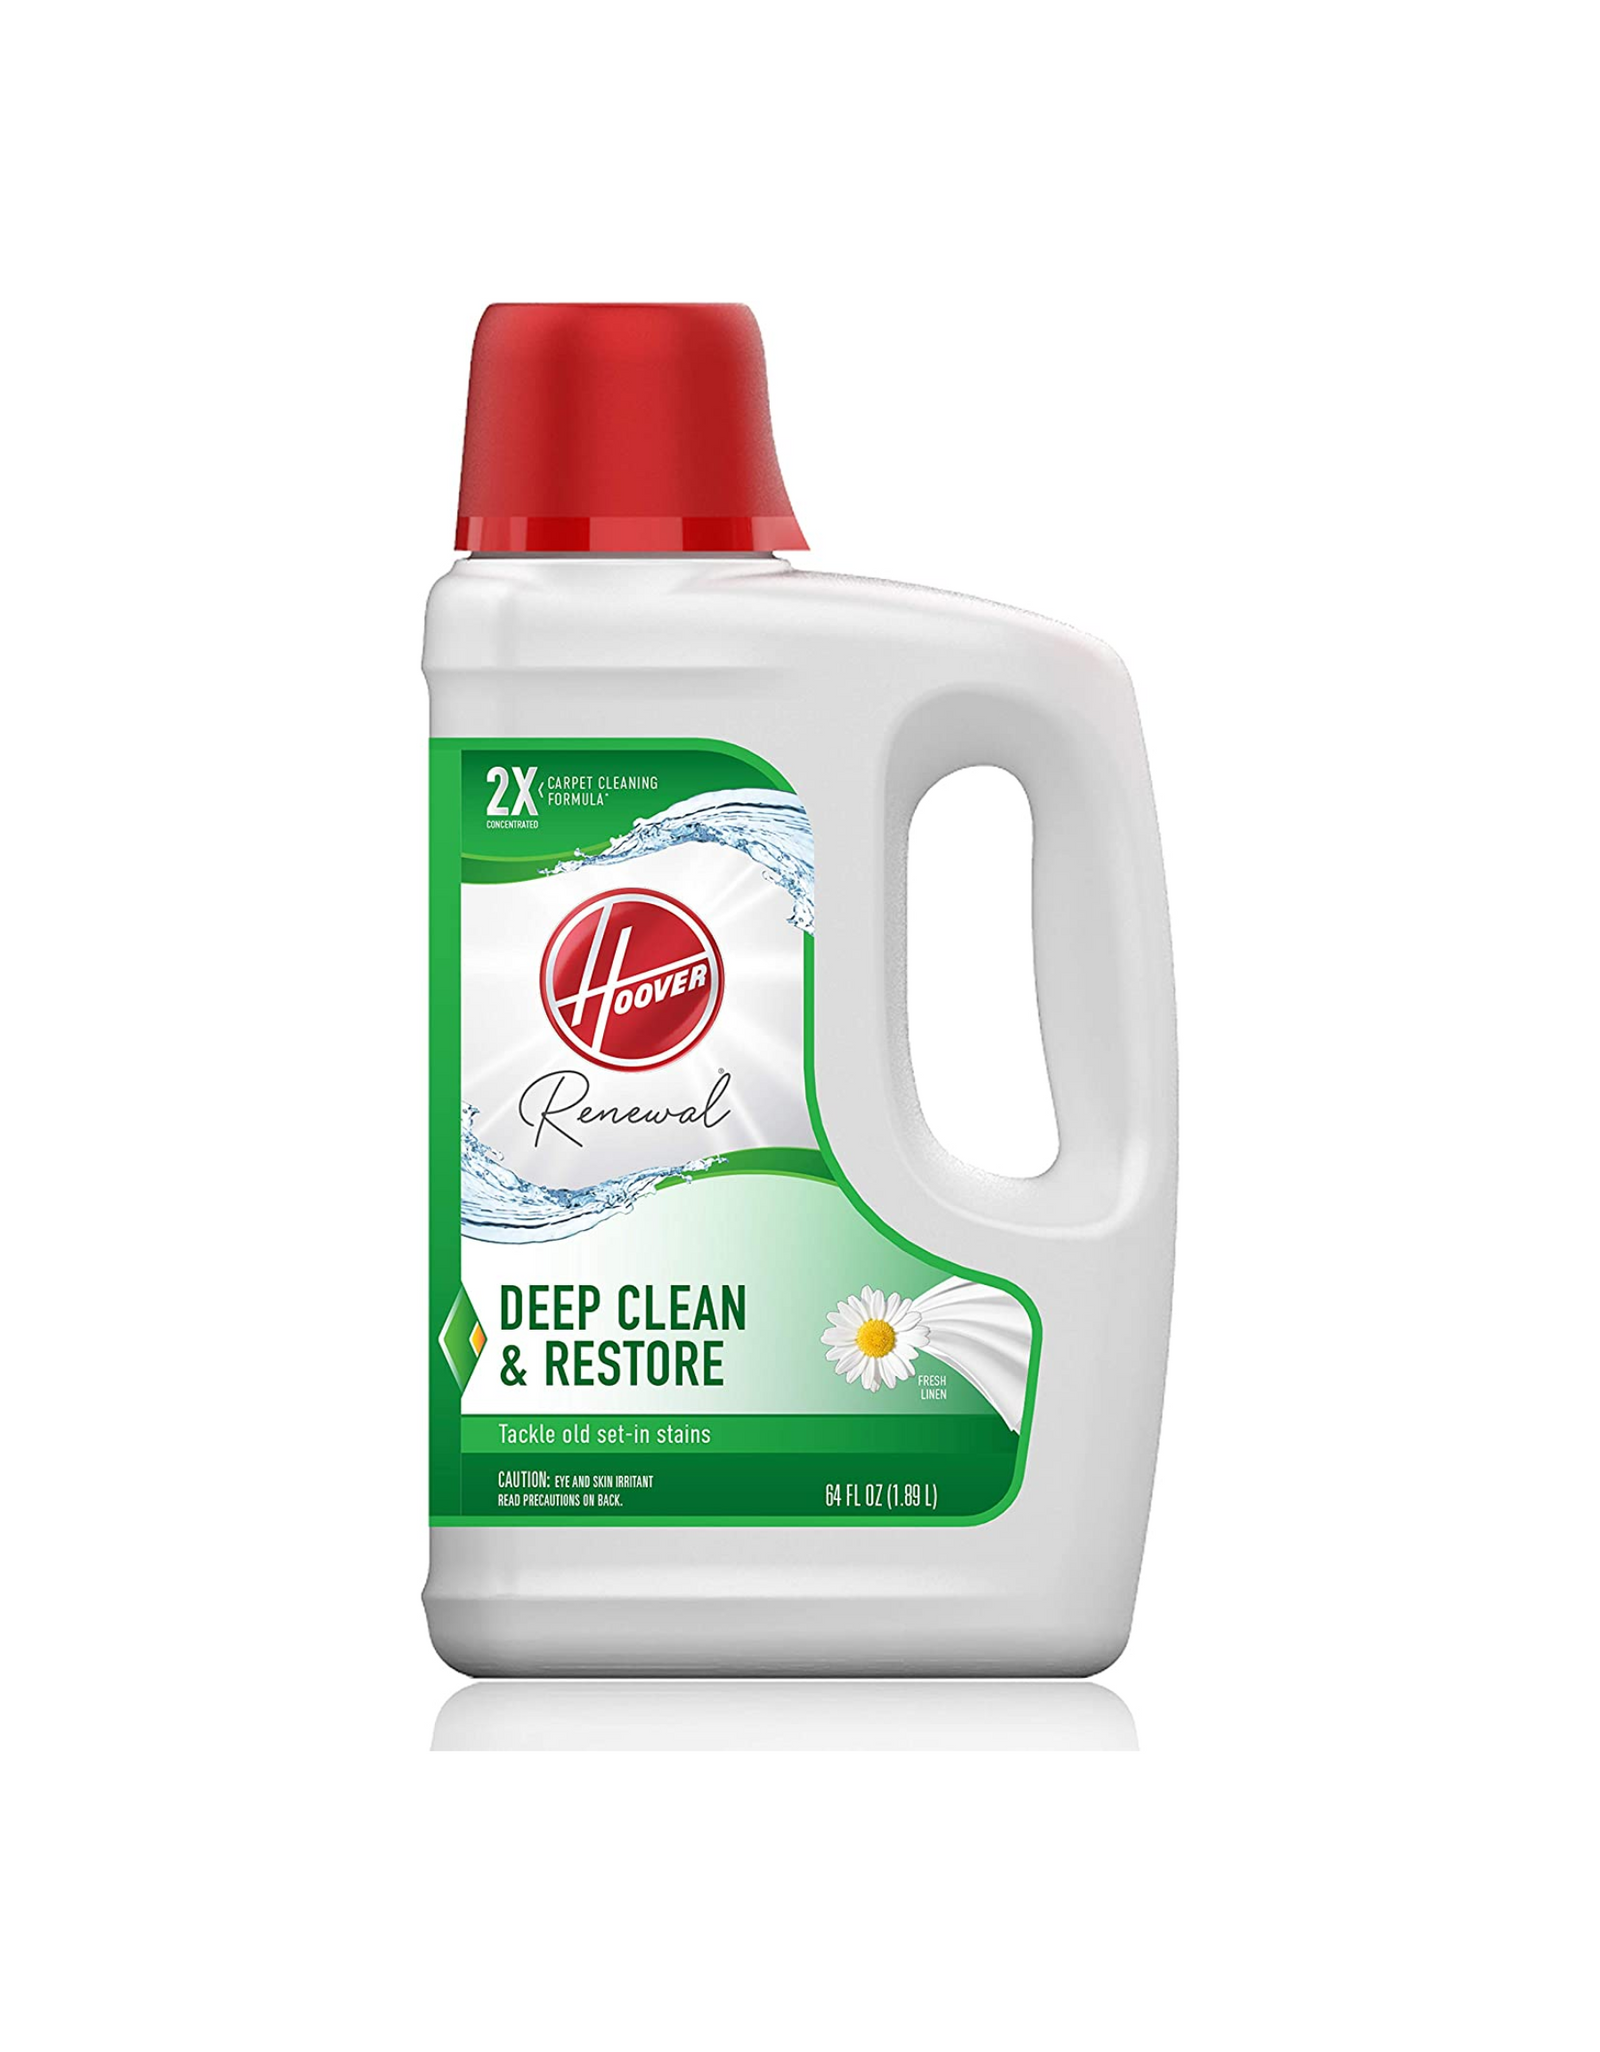 Hoover Renewal Deep Cleaning Carpet Shampoo AH30924, Deep Clean & Restore, 64 fl oz, White